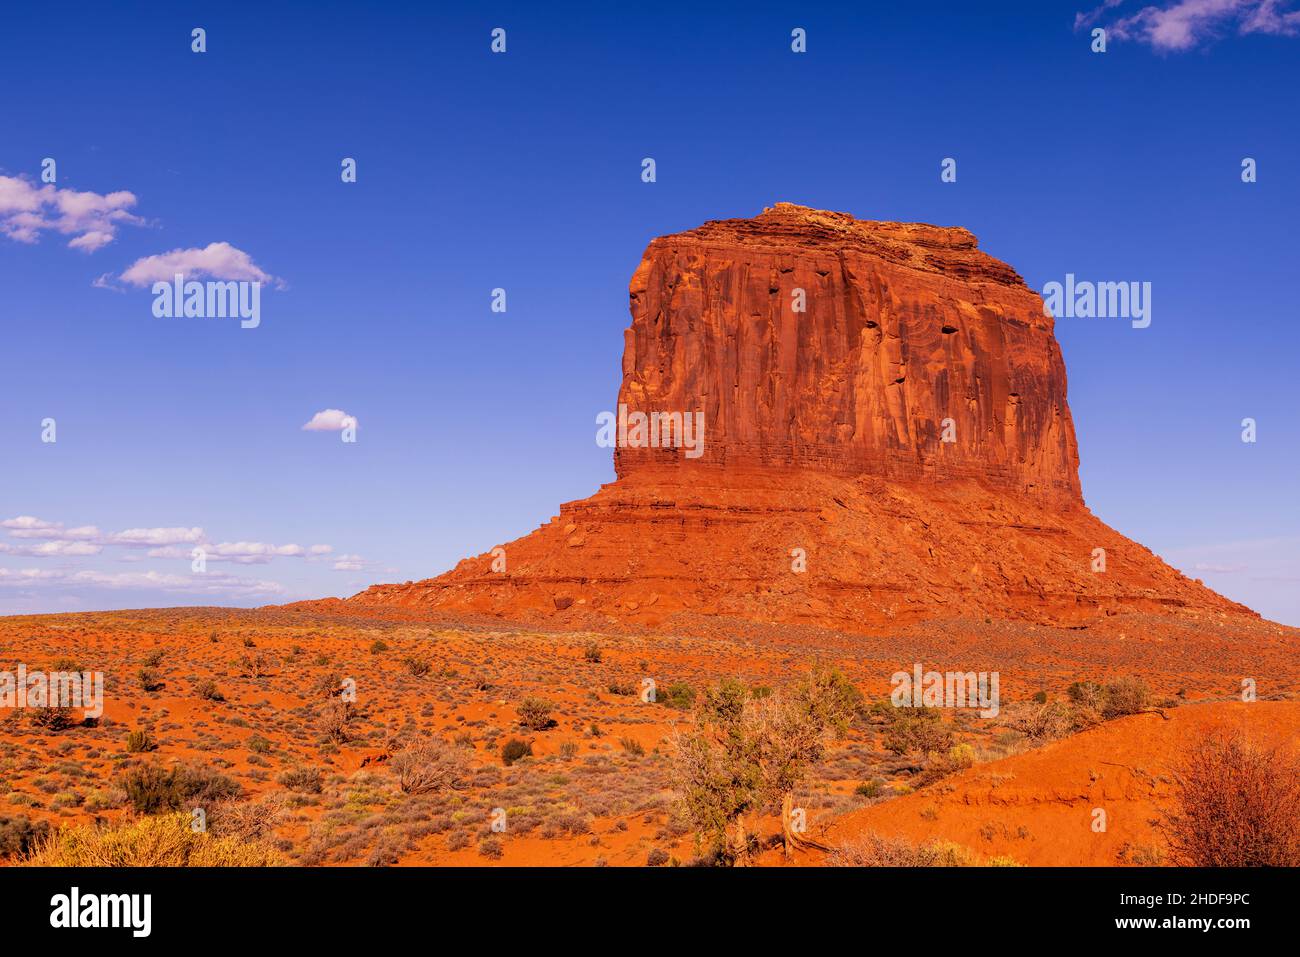 Merrick Butte rock formation in Monument Valley Navajo Tribal Park, Utah Stock Photo